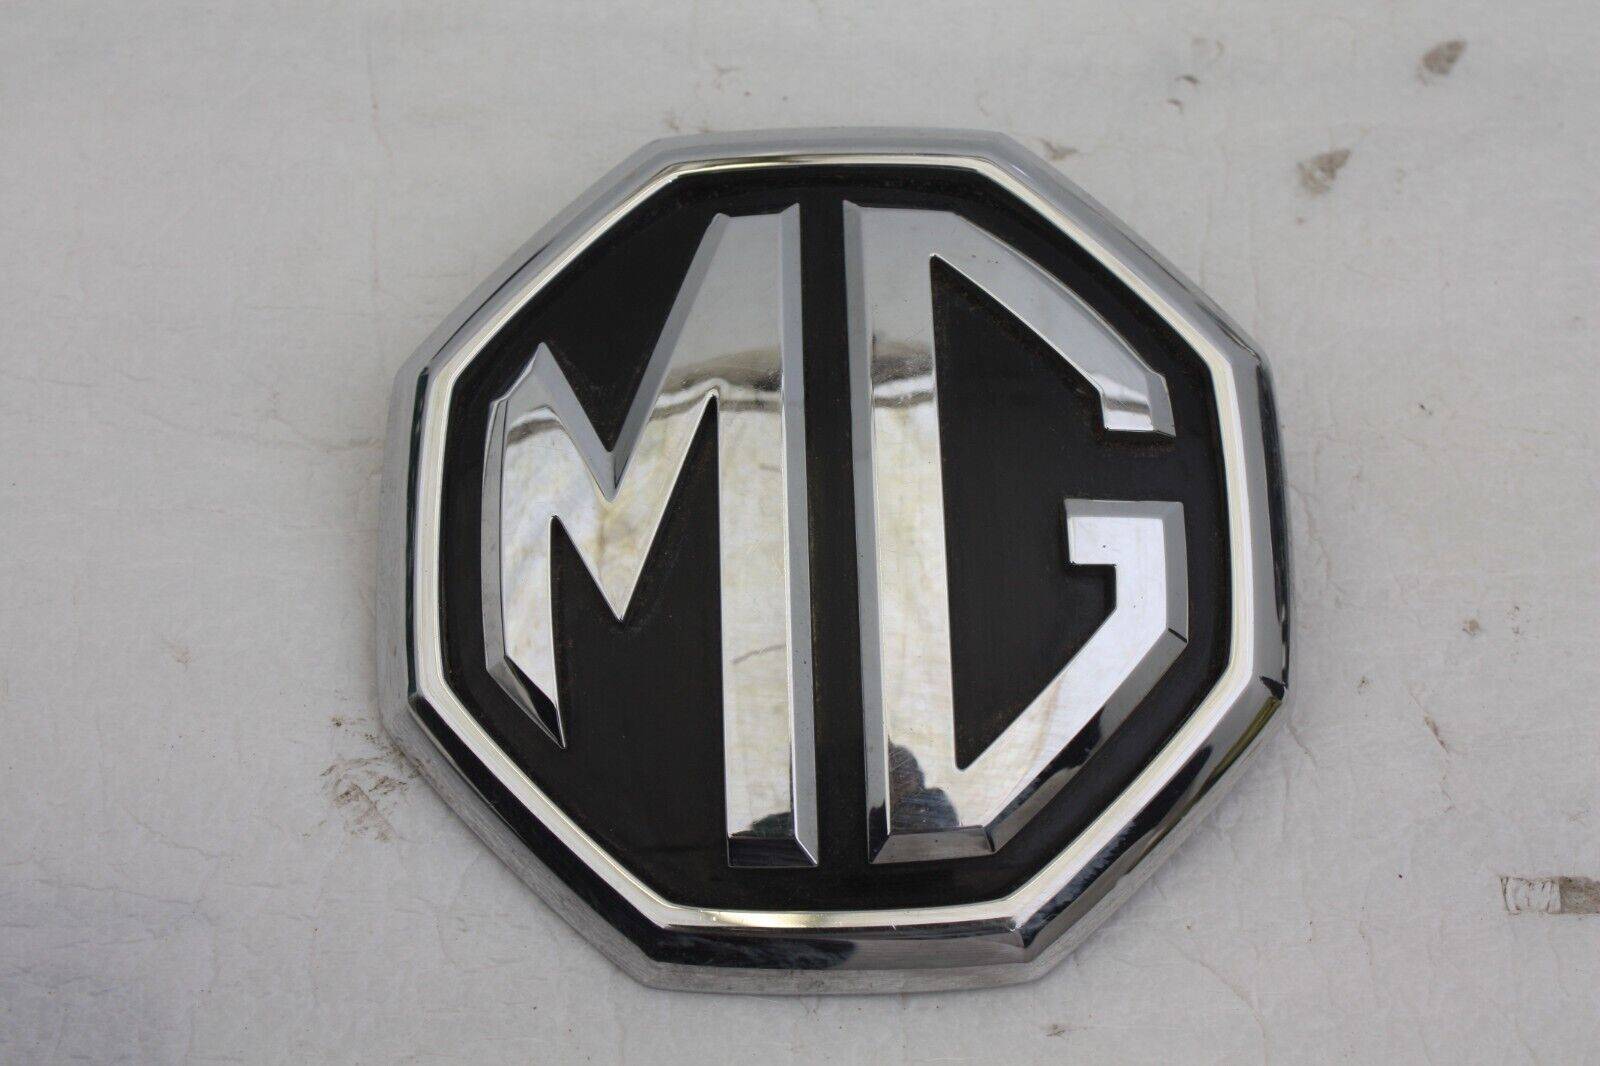 MG ZS Front Grill Logo Emblem Badge 110375929 Genuine 176400306714